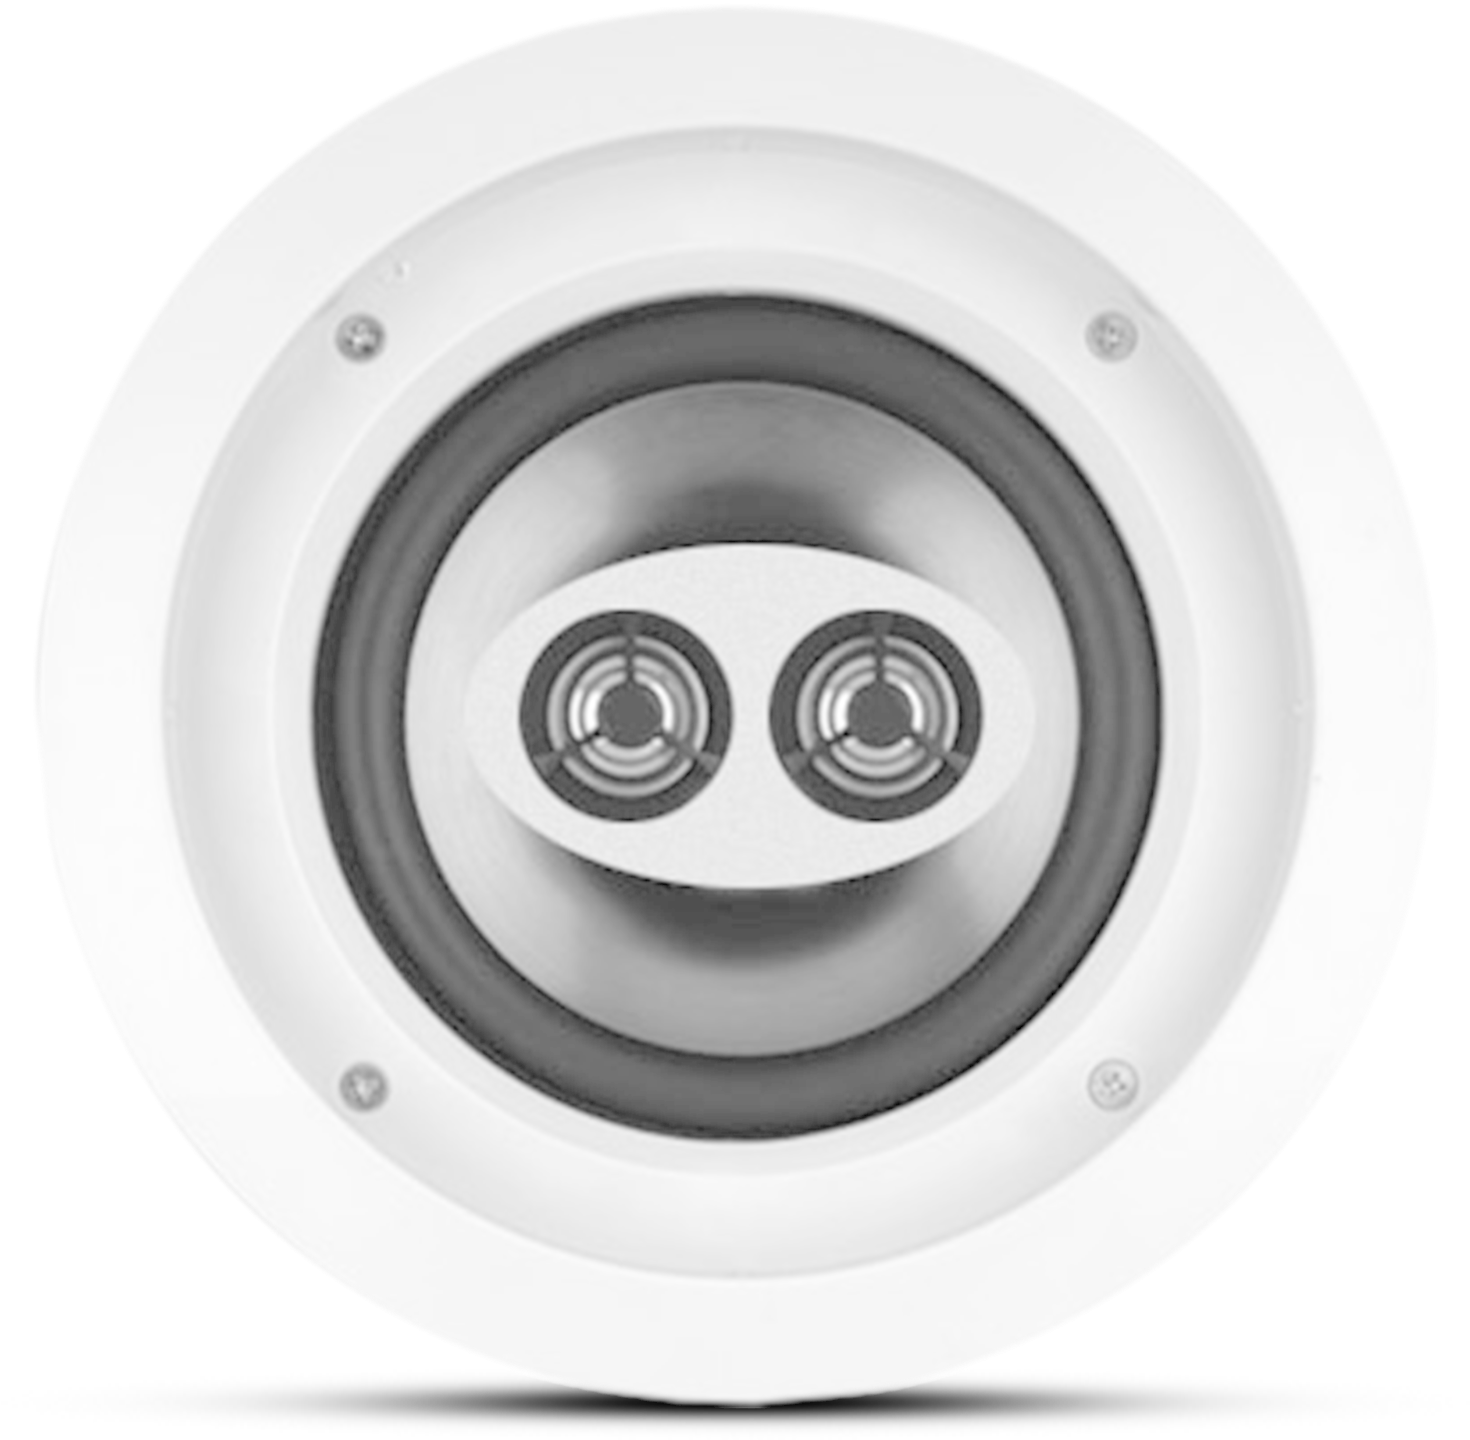 Cs60rdt - Rca In Ceiling Speaker (1605x1605), Png Download